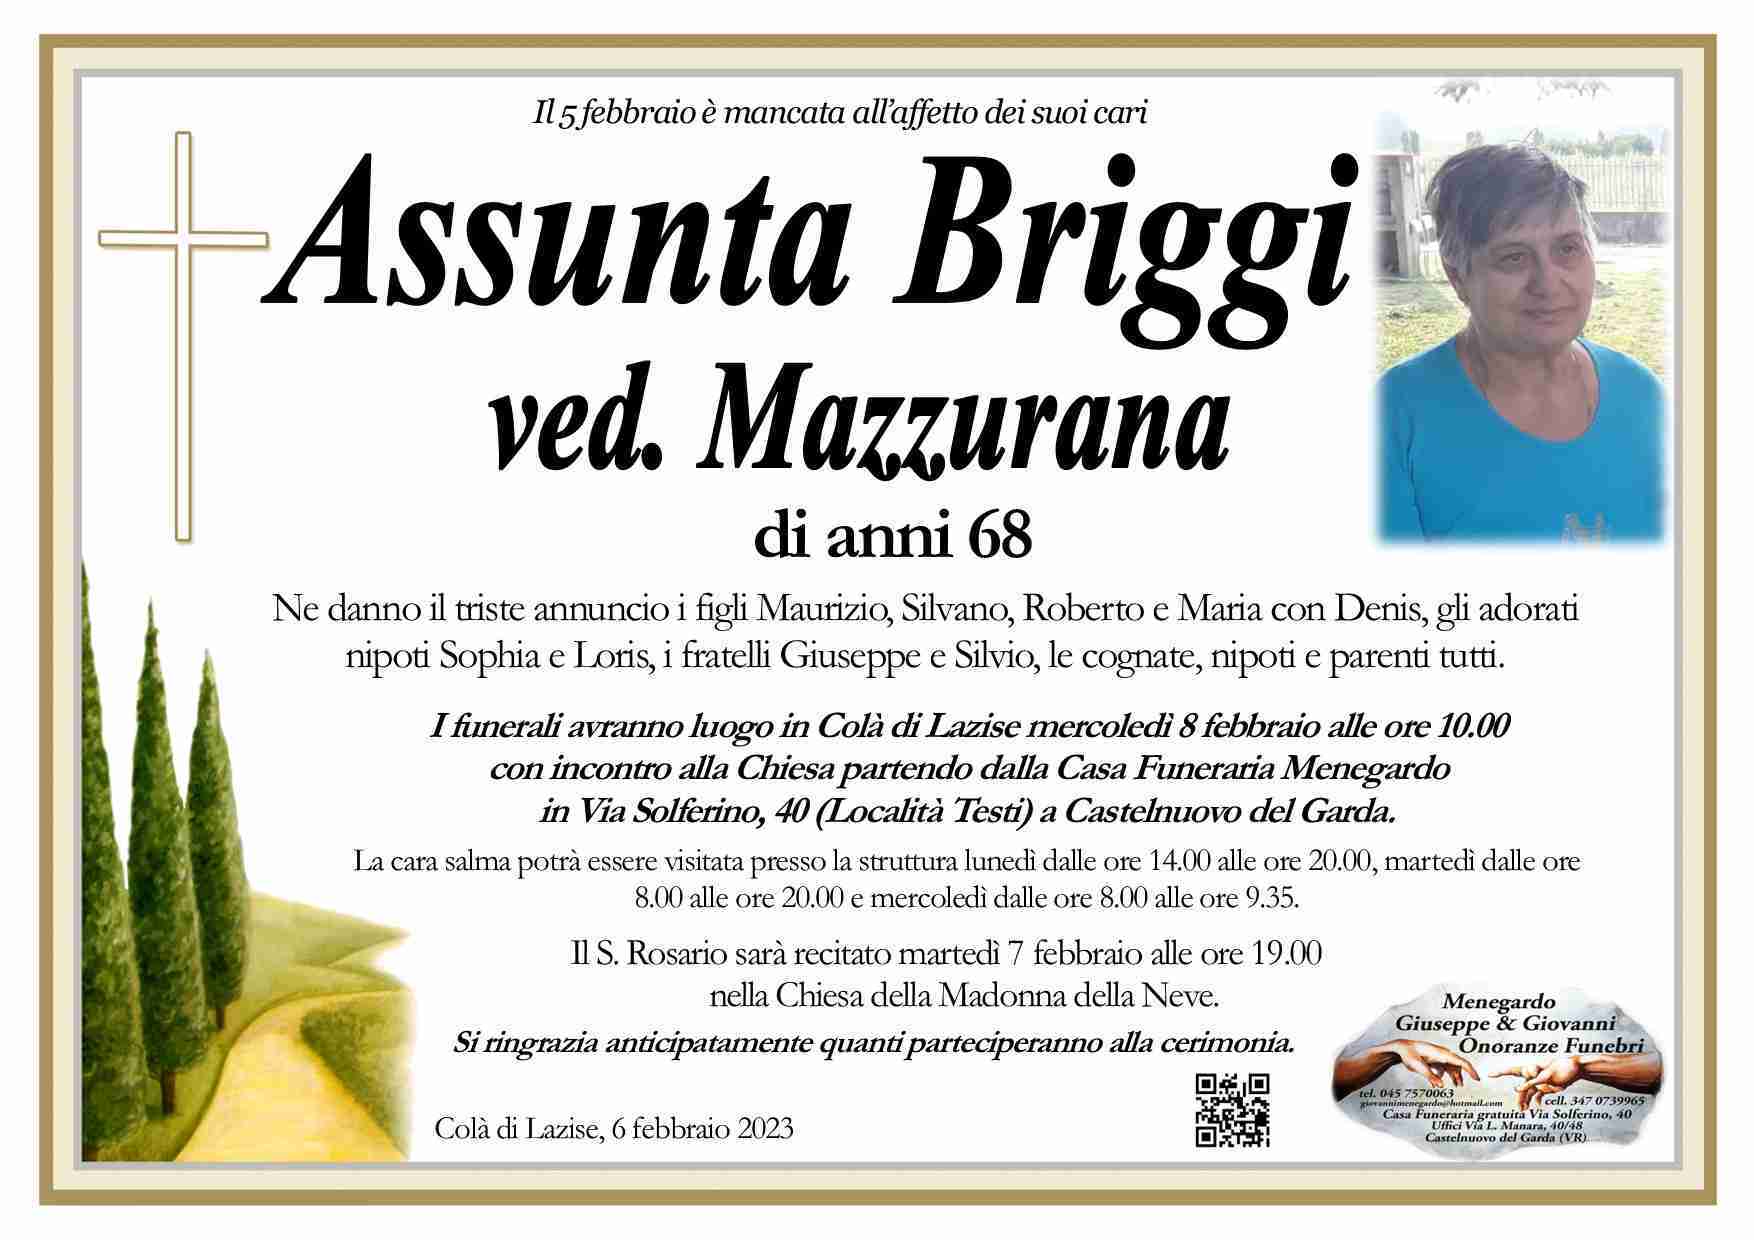 Assunta Briggi